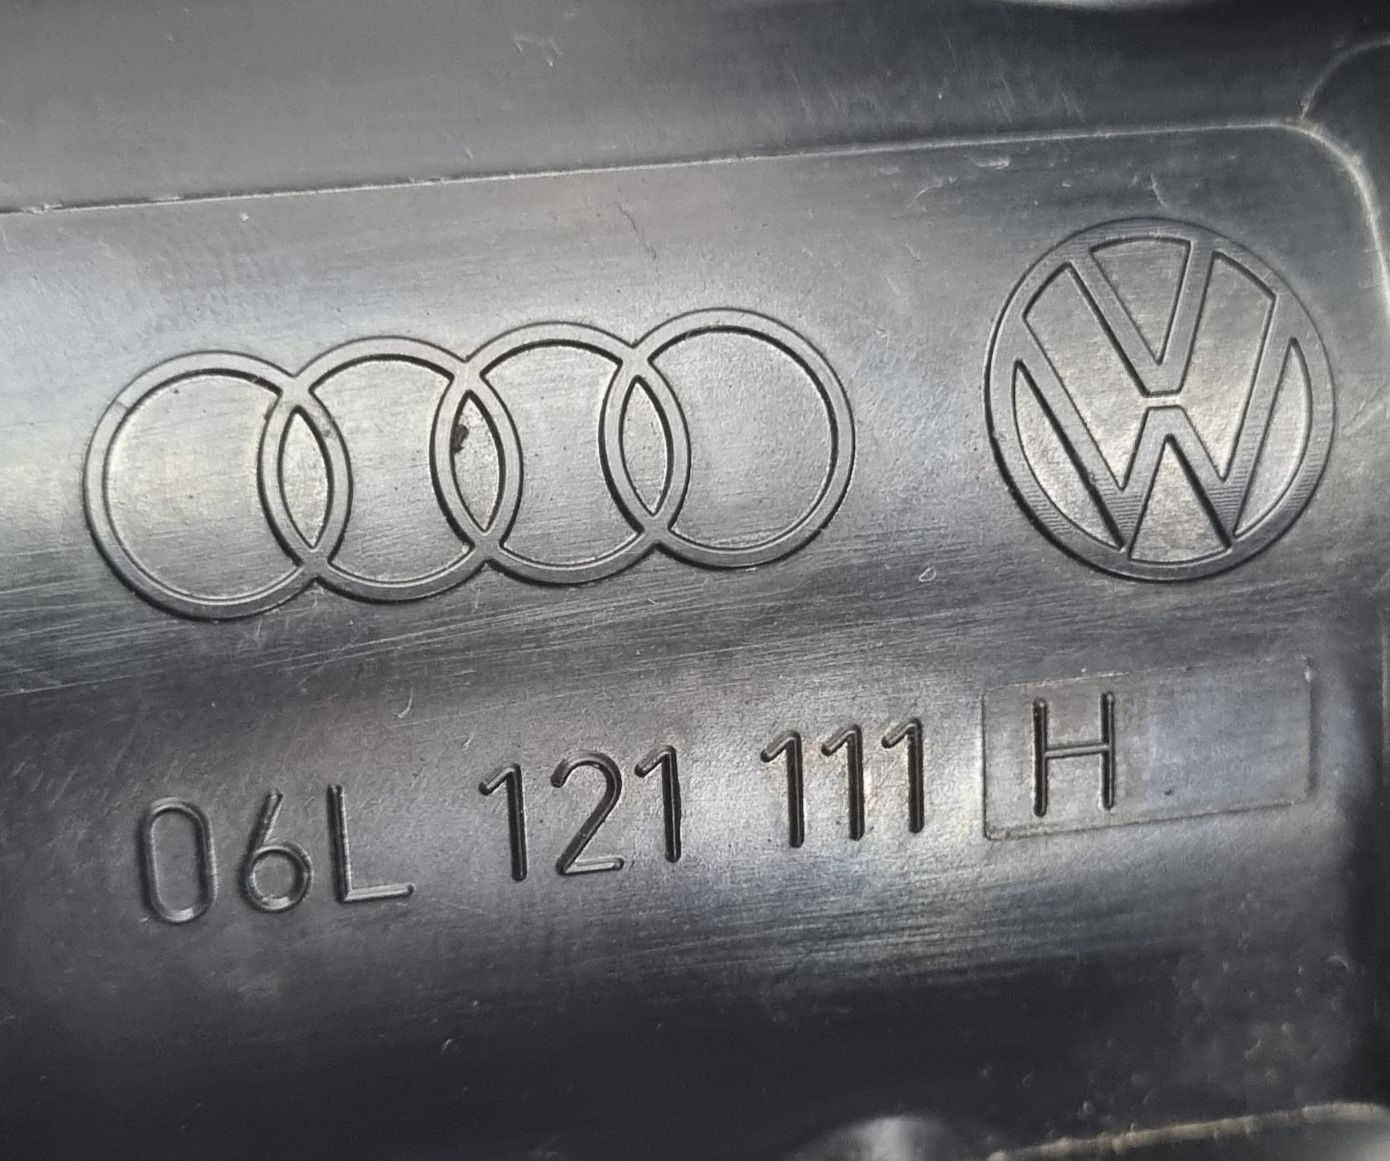 Корпус Термостата Помпа VW Audi Skoda Seat 06L121111H